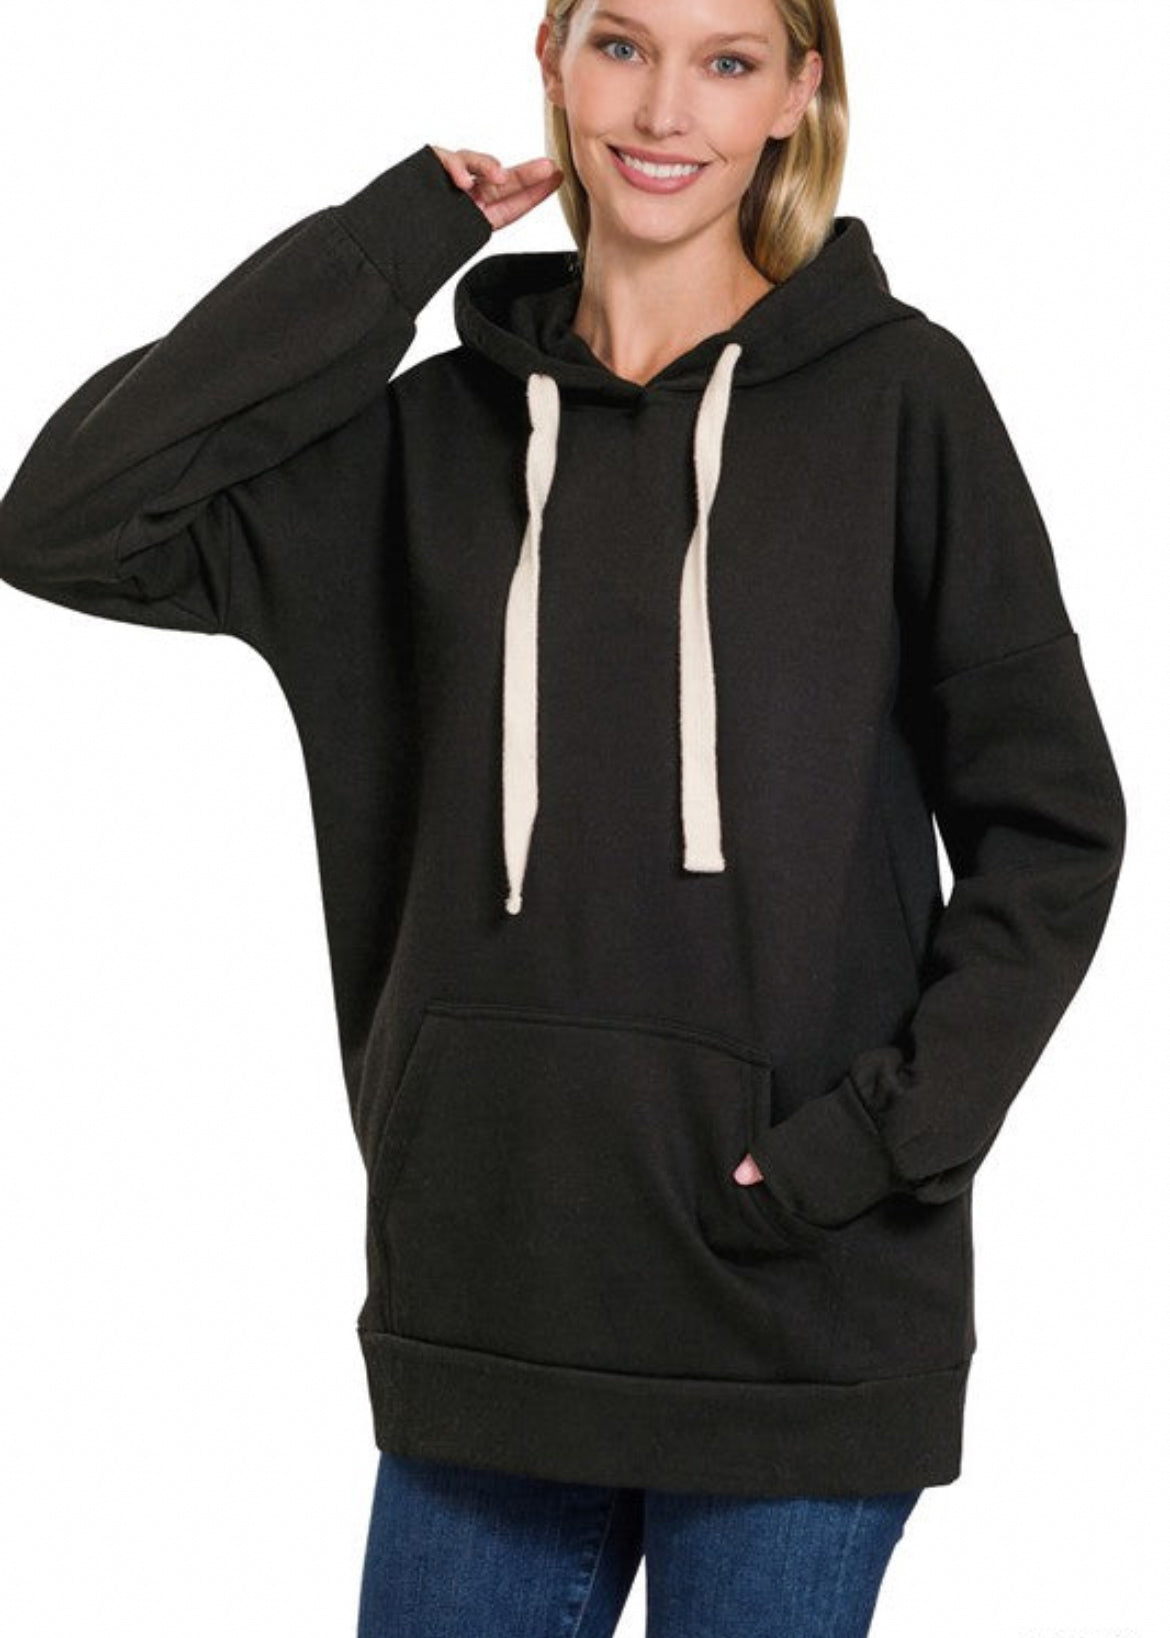 Oversized hoodie sweatshirt with kangaroo front pocket and cream drawstrings. Shown in black